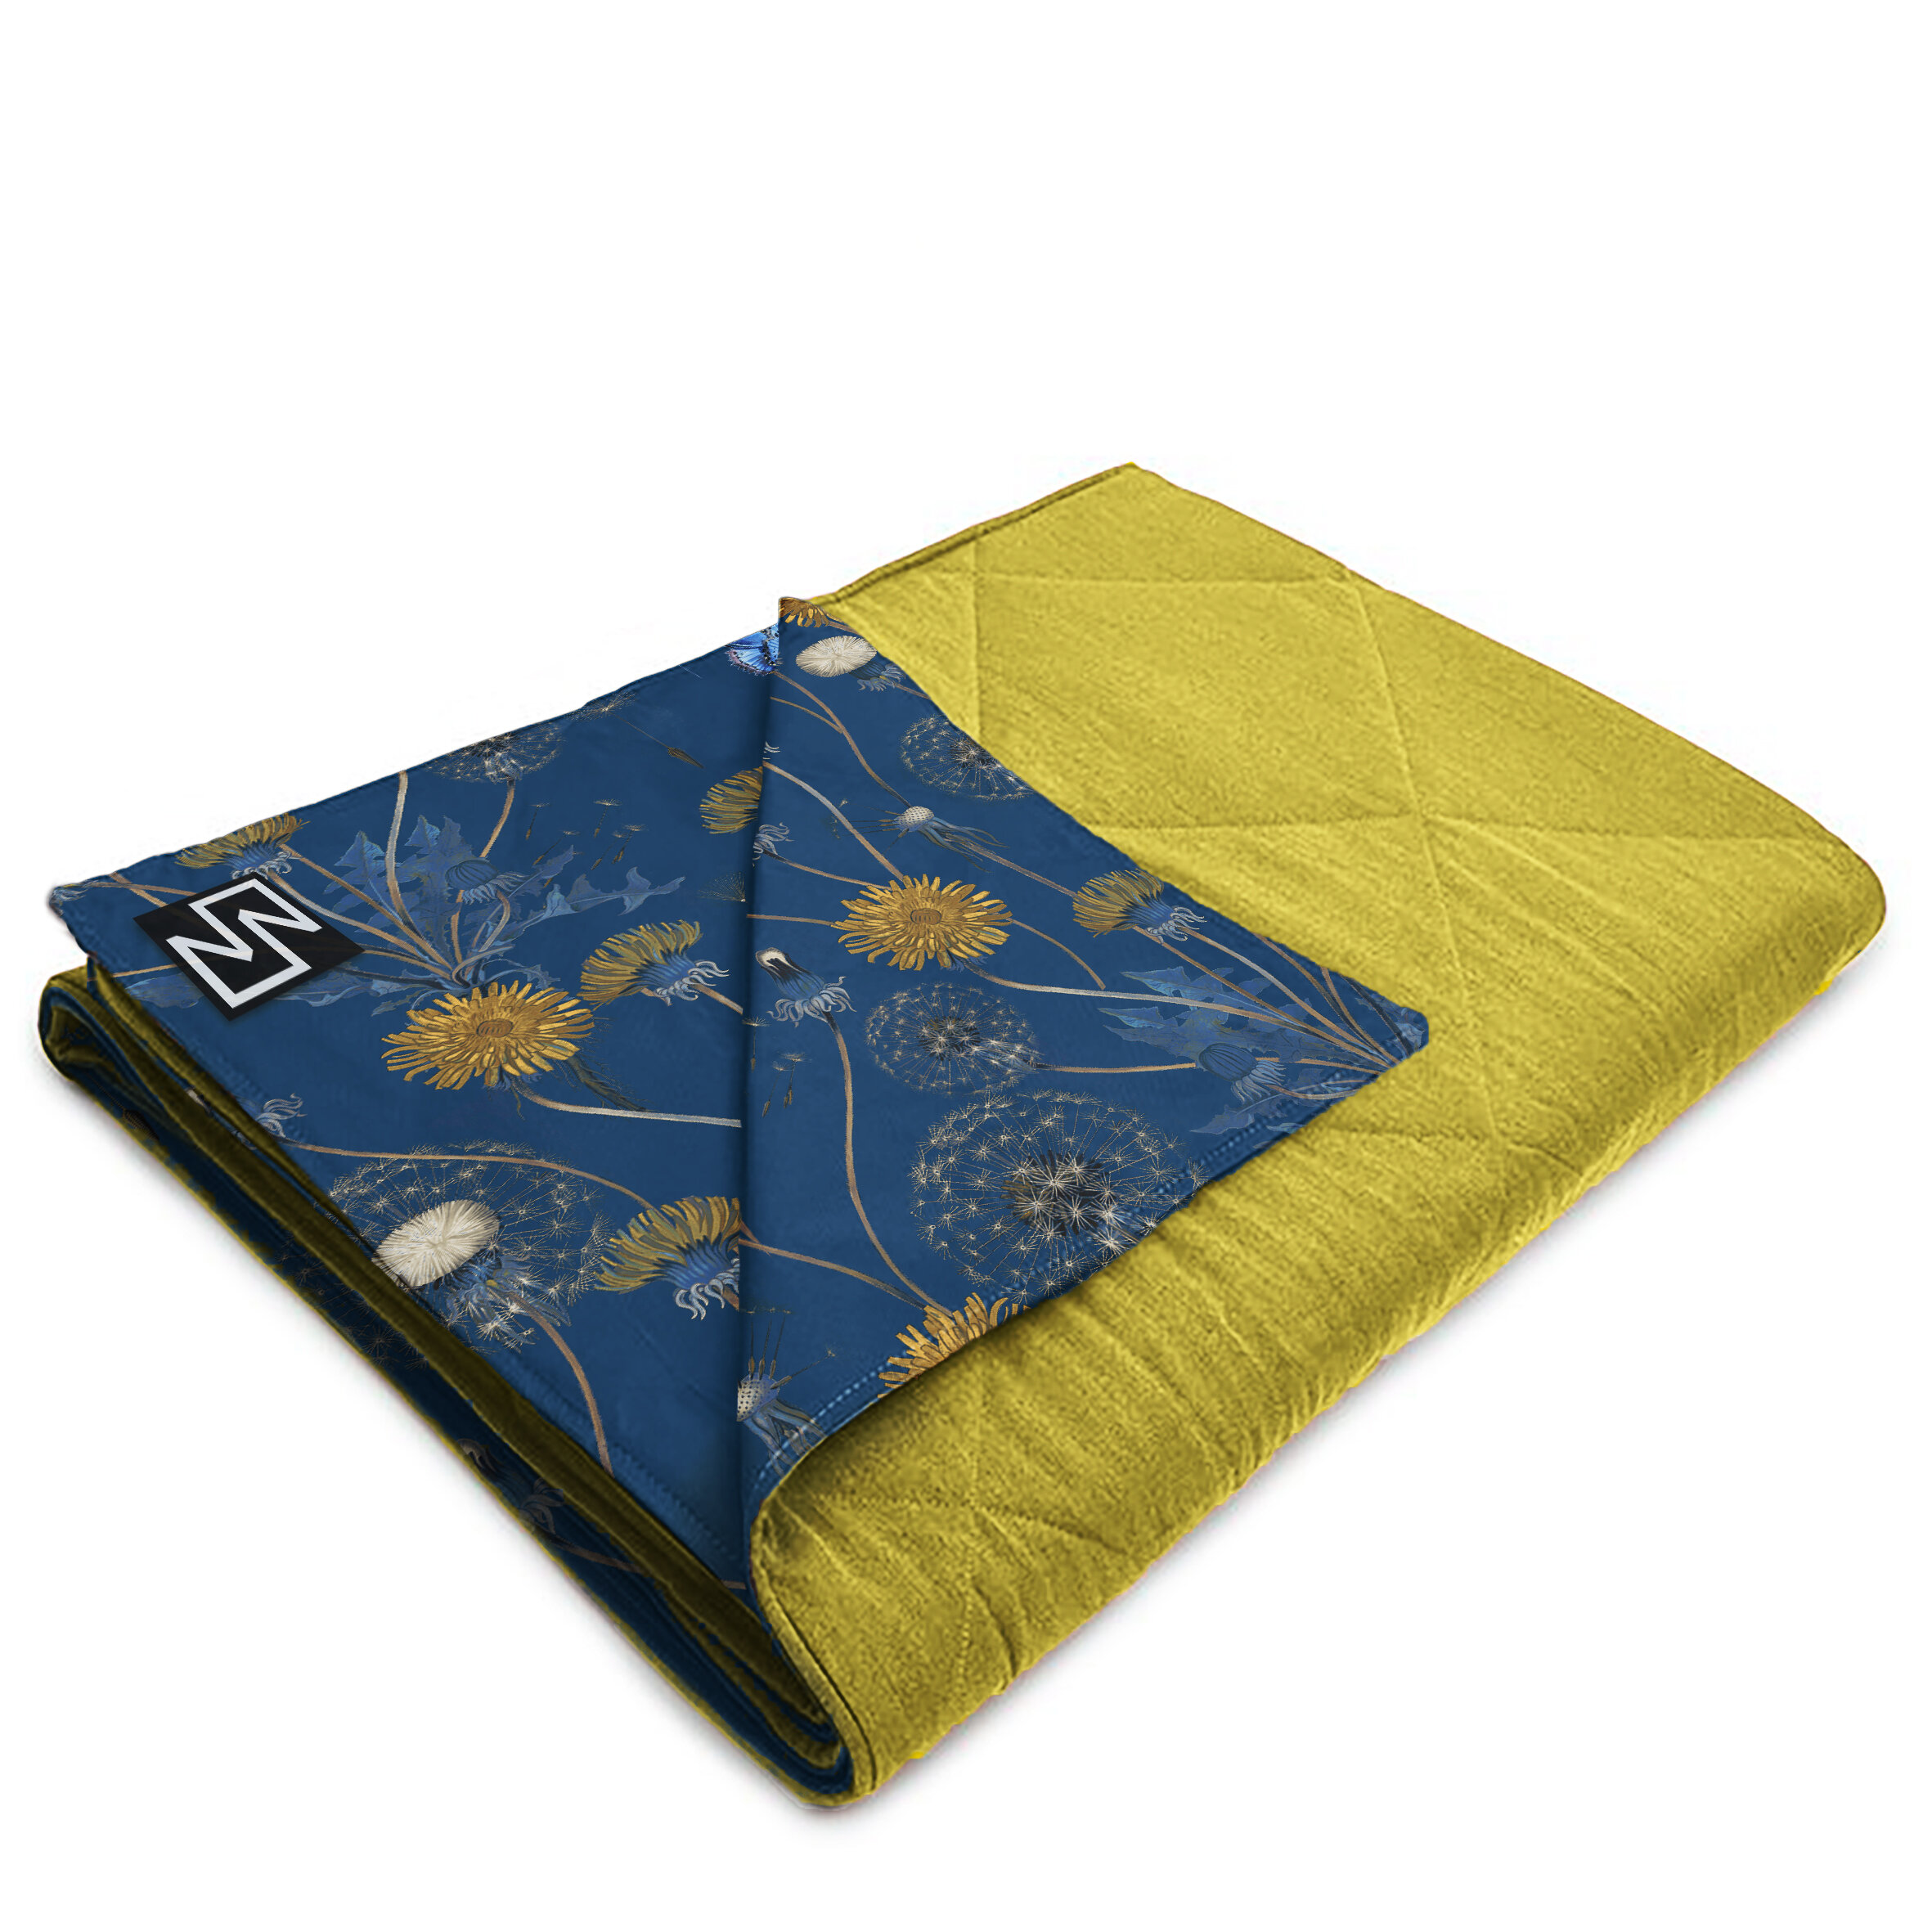 Taraxcum Picnic Blanket 2.jpg